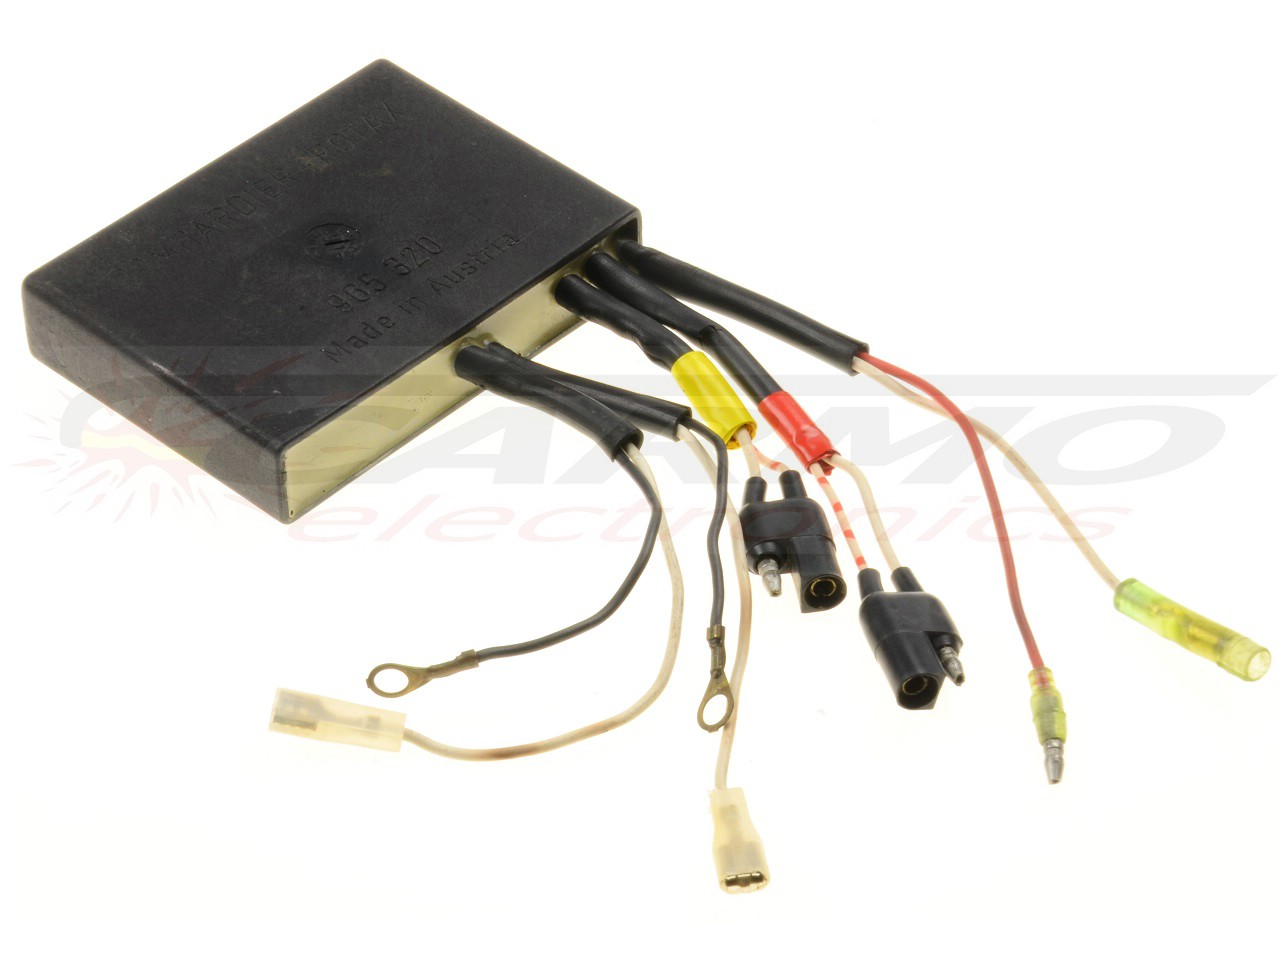 Rotax 912A 912UL electronic box SMD module igniter ignition module CDI Box bombardier (965 320)